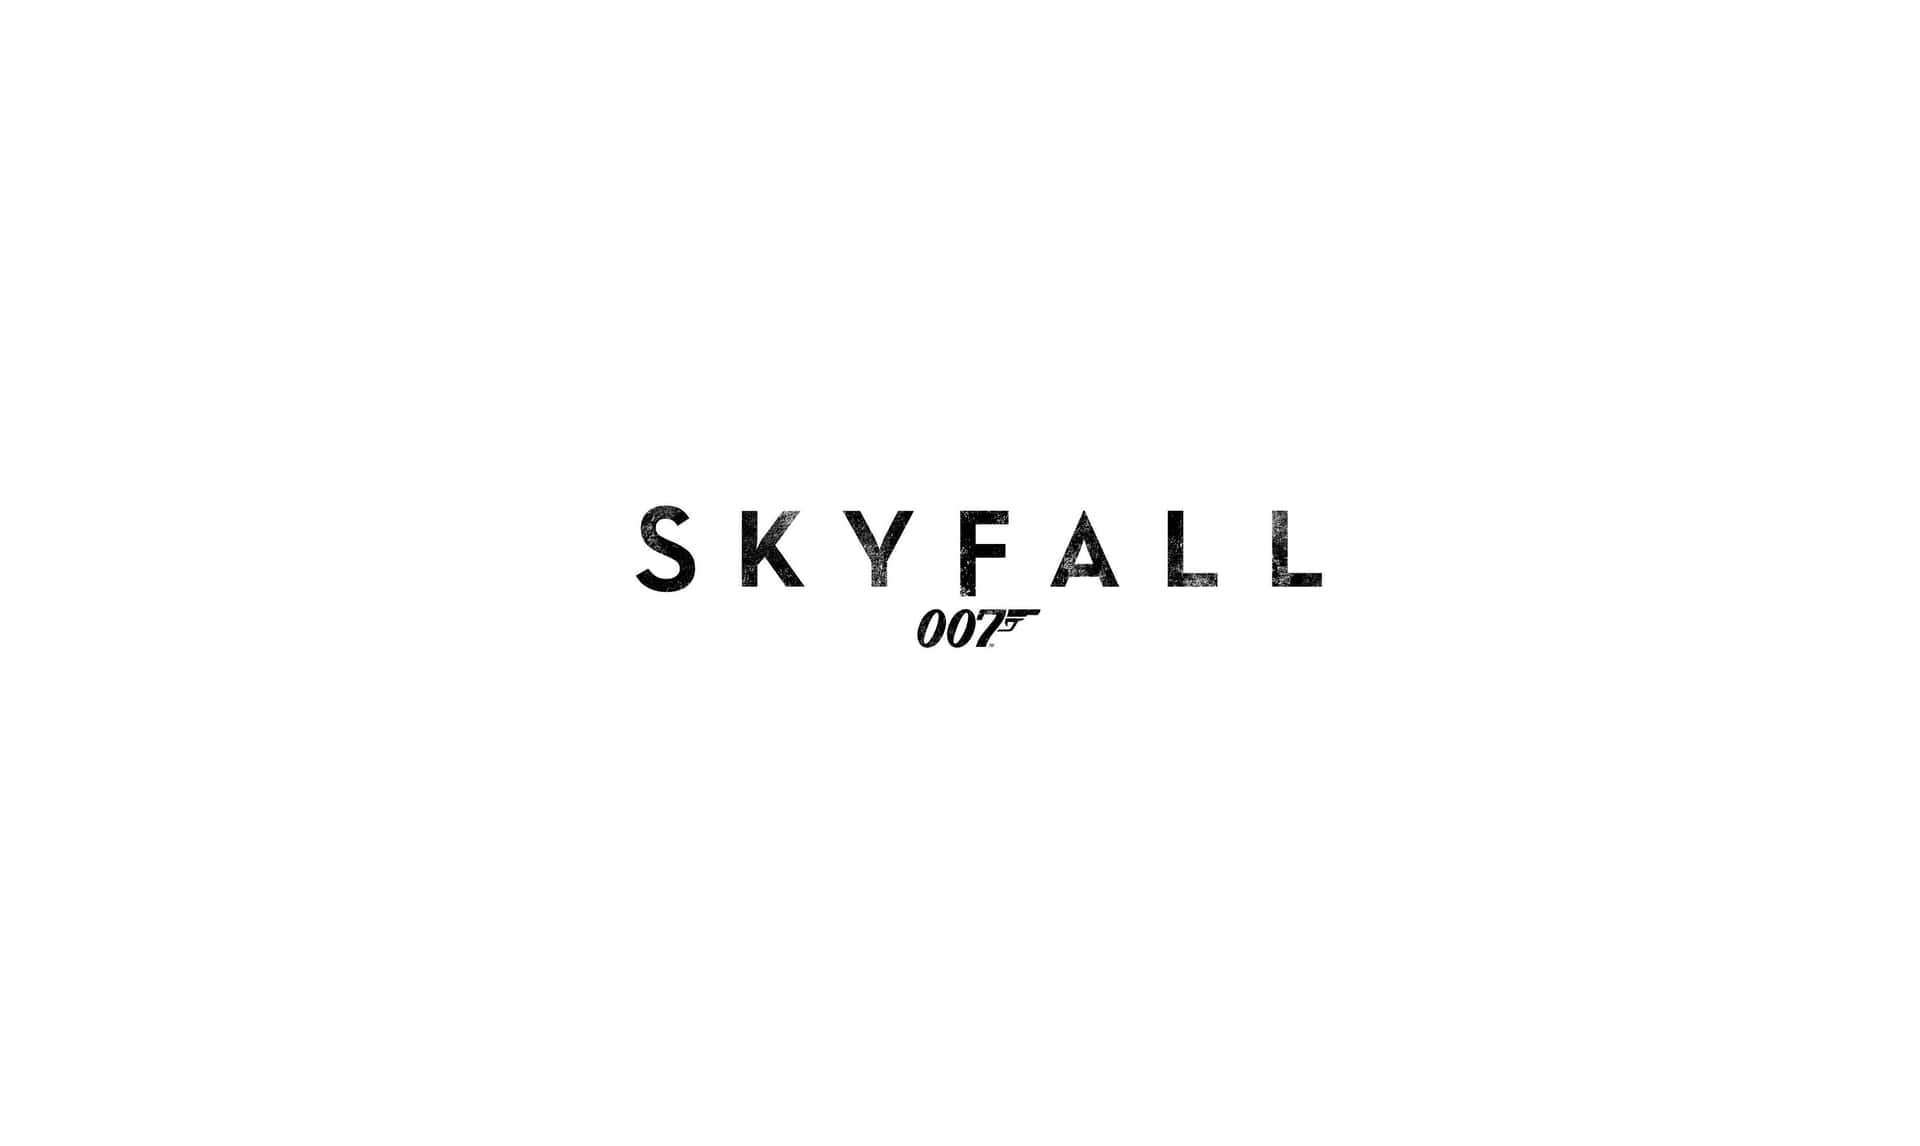 Skyfall007 Movie Title Wallpaper